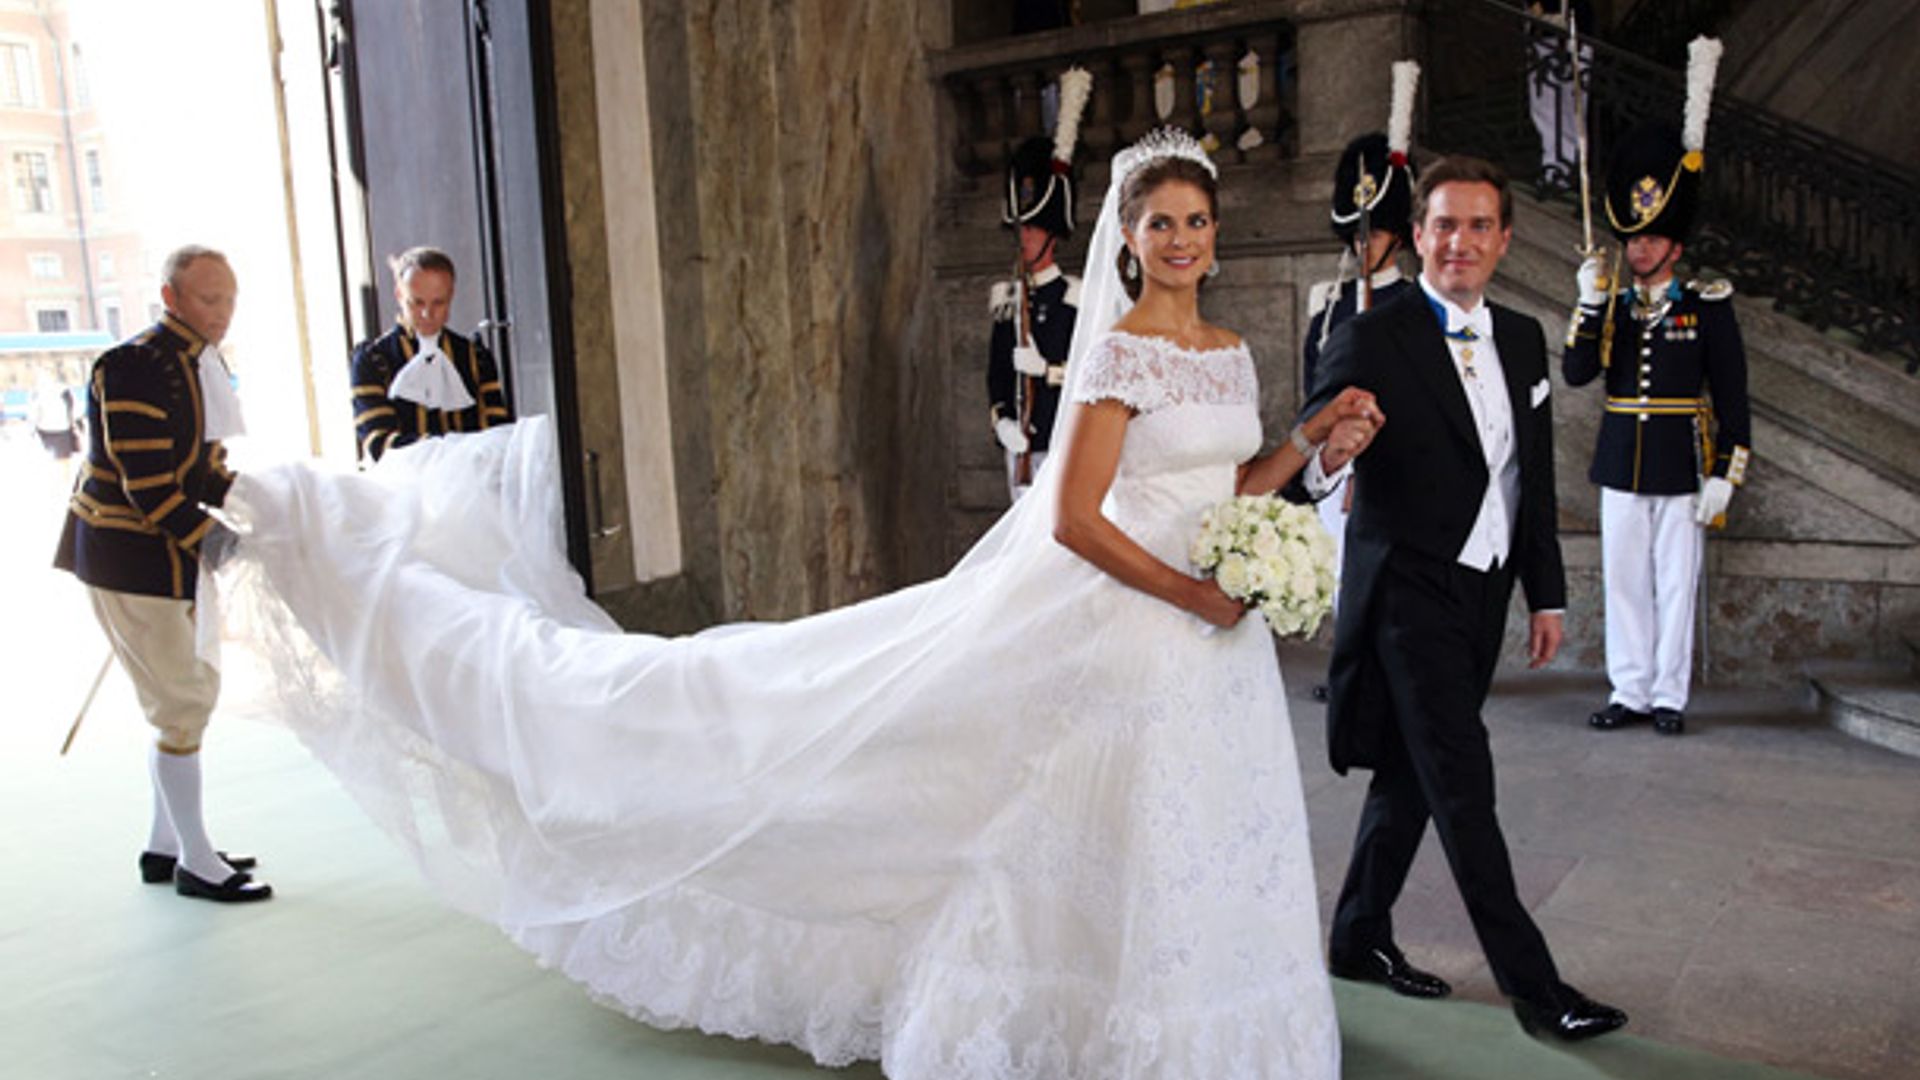 Wedding of Princess Madeleine of Sweden and Christopher O'Neill